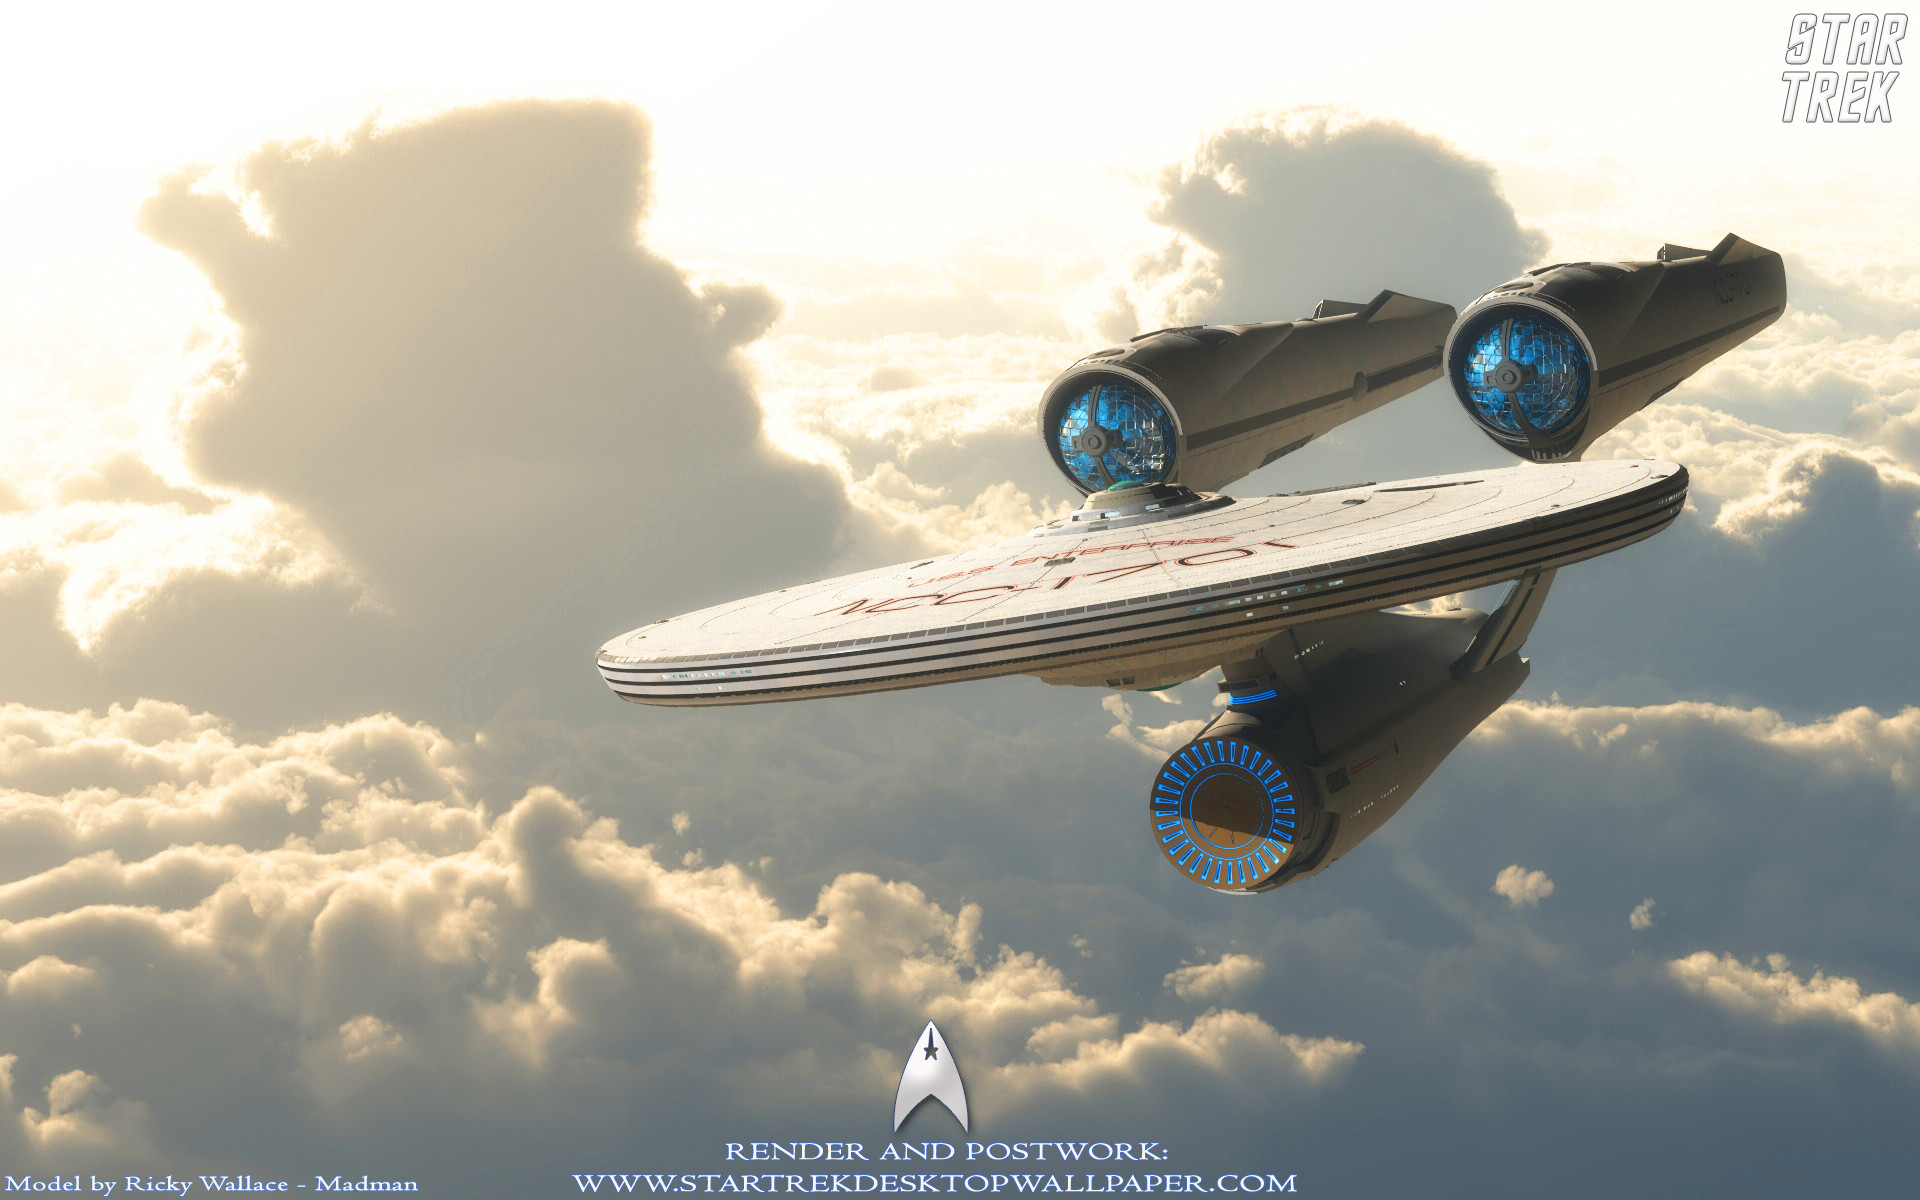 136 Star Trek Enterprise Wallpaper Hd Images, Photos, Reviews